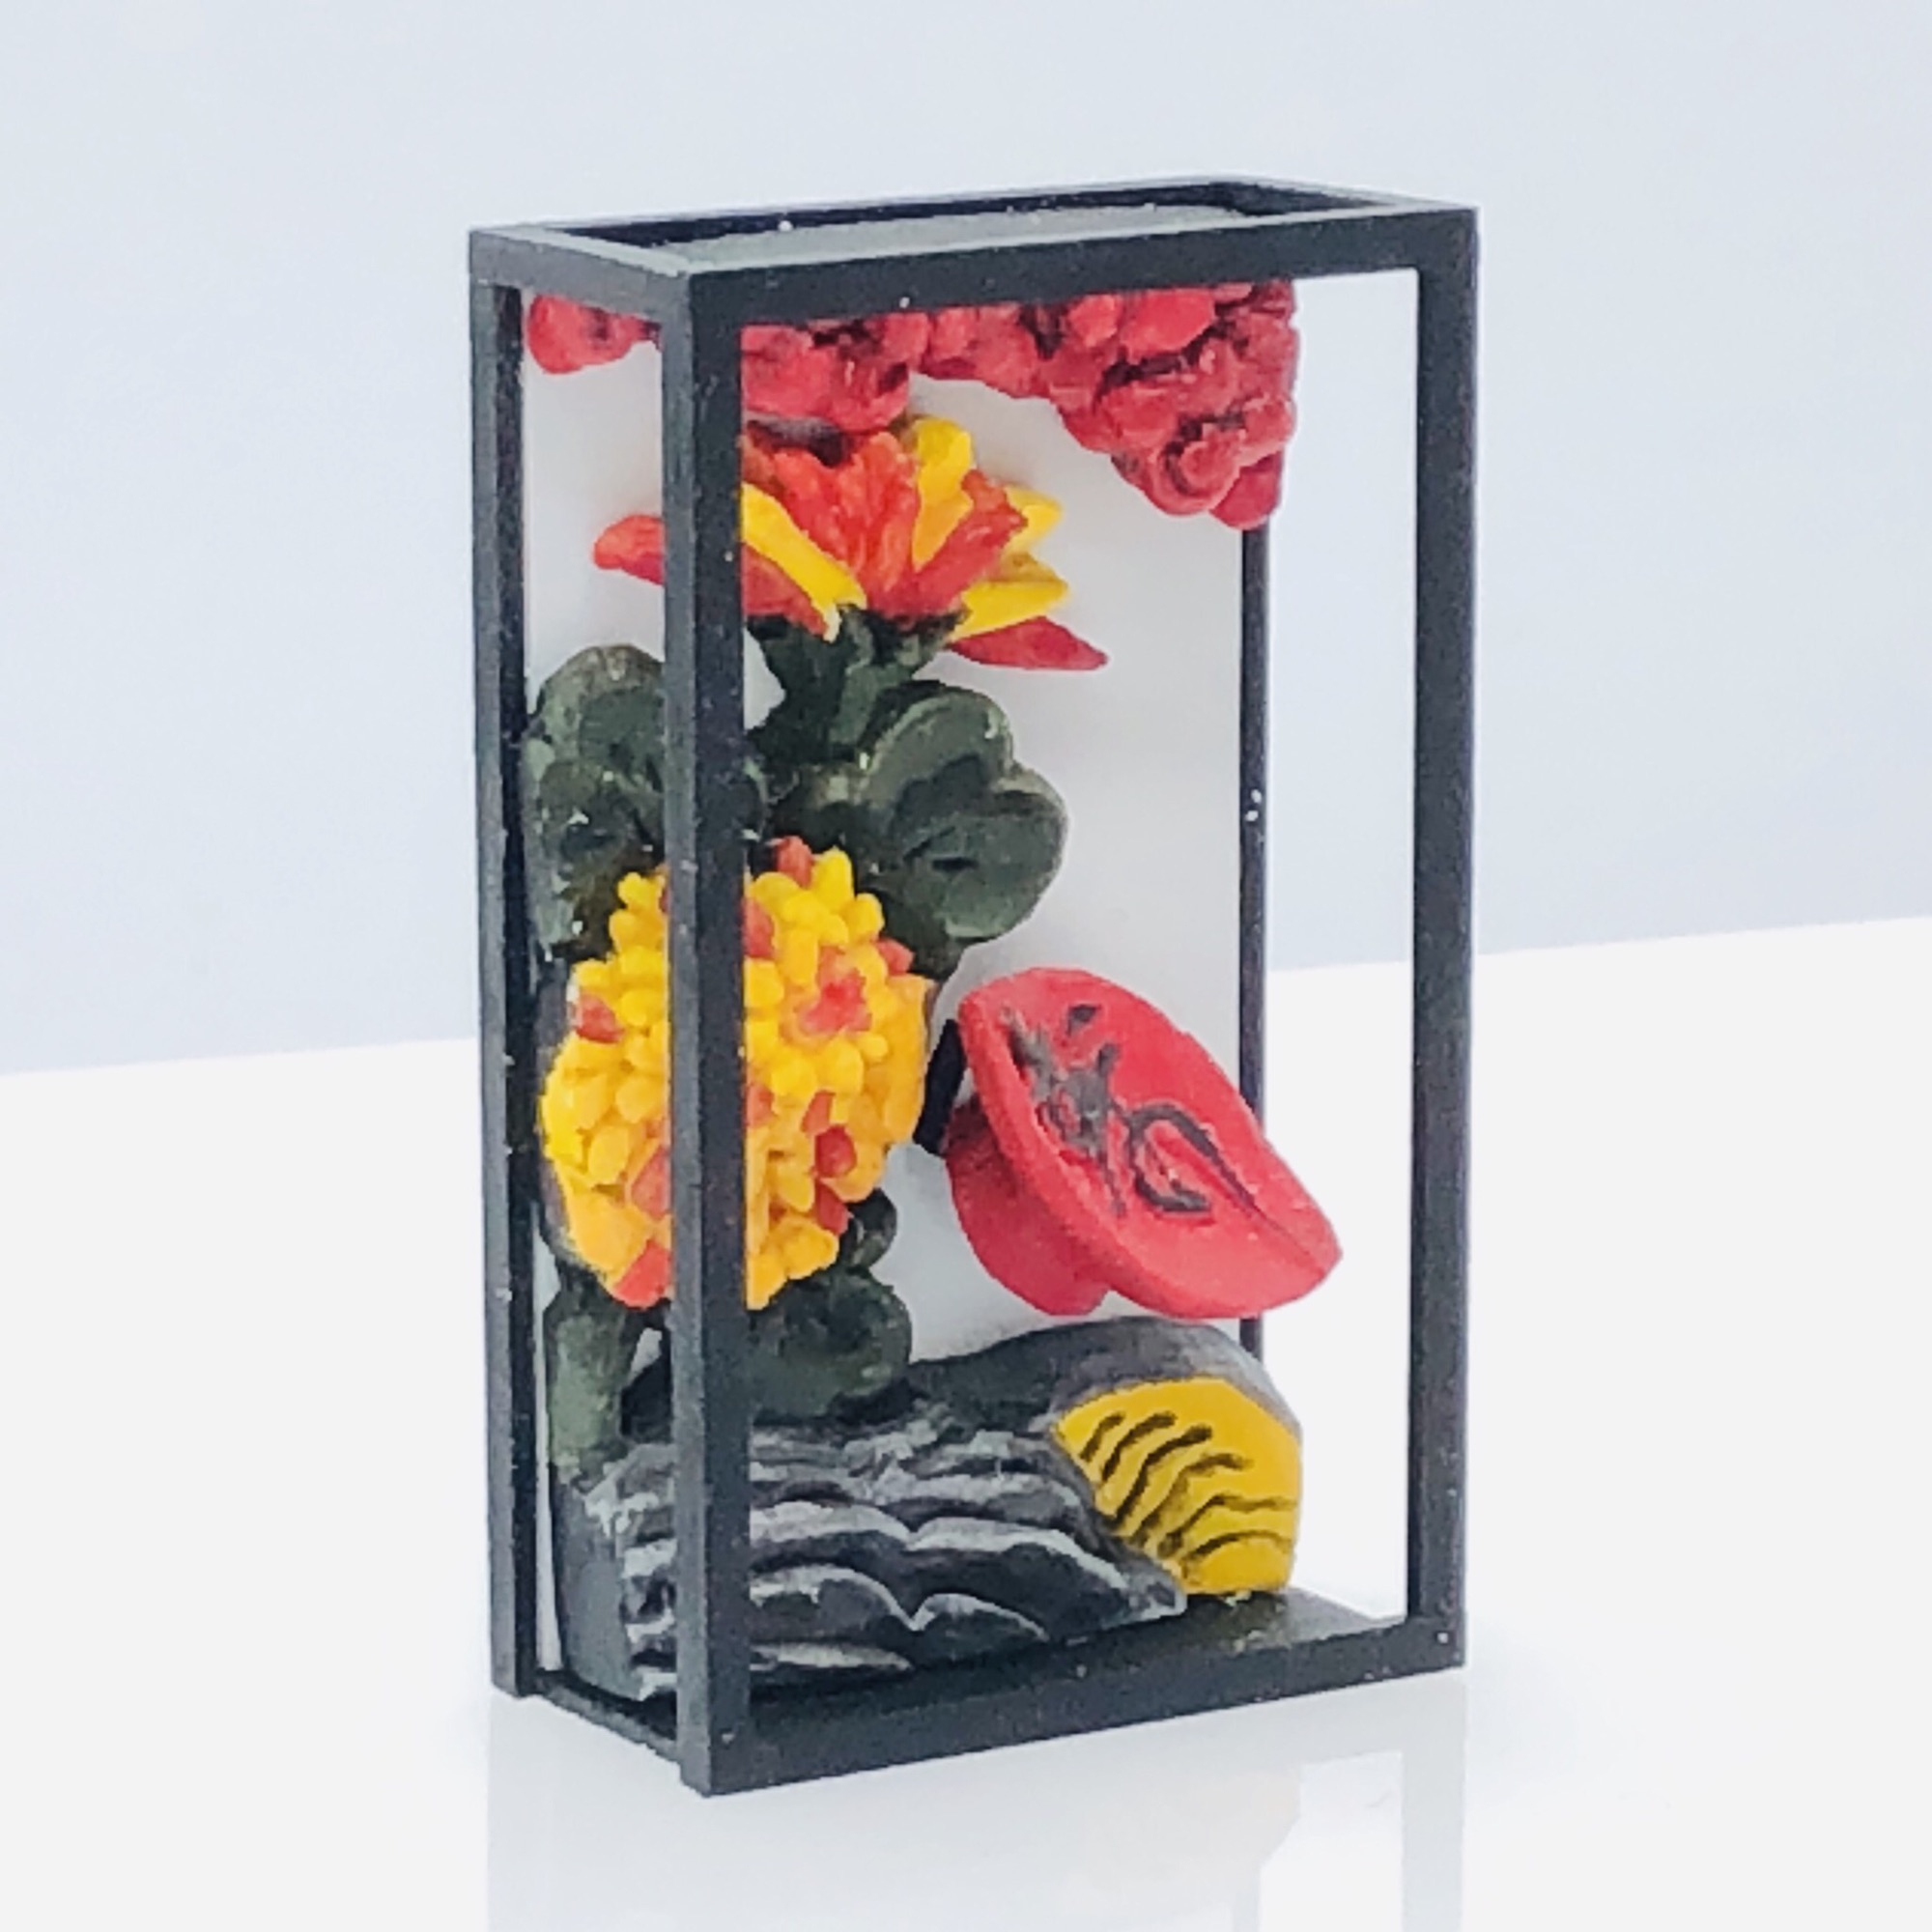 造形】立体花札 「菊と盃」/ [Crafts] 3D Hanafuda 